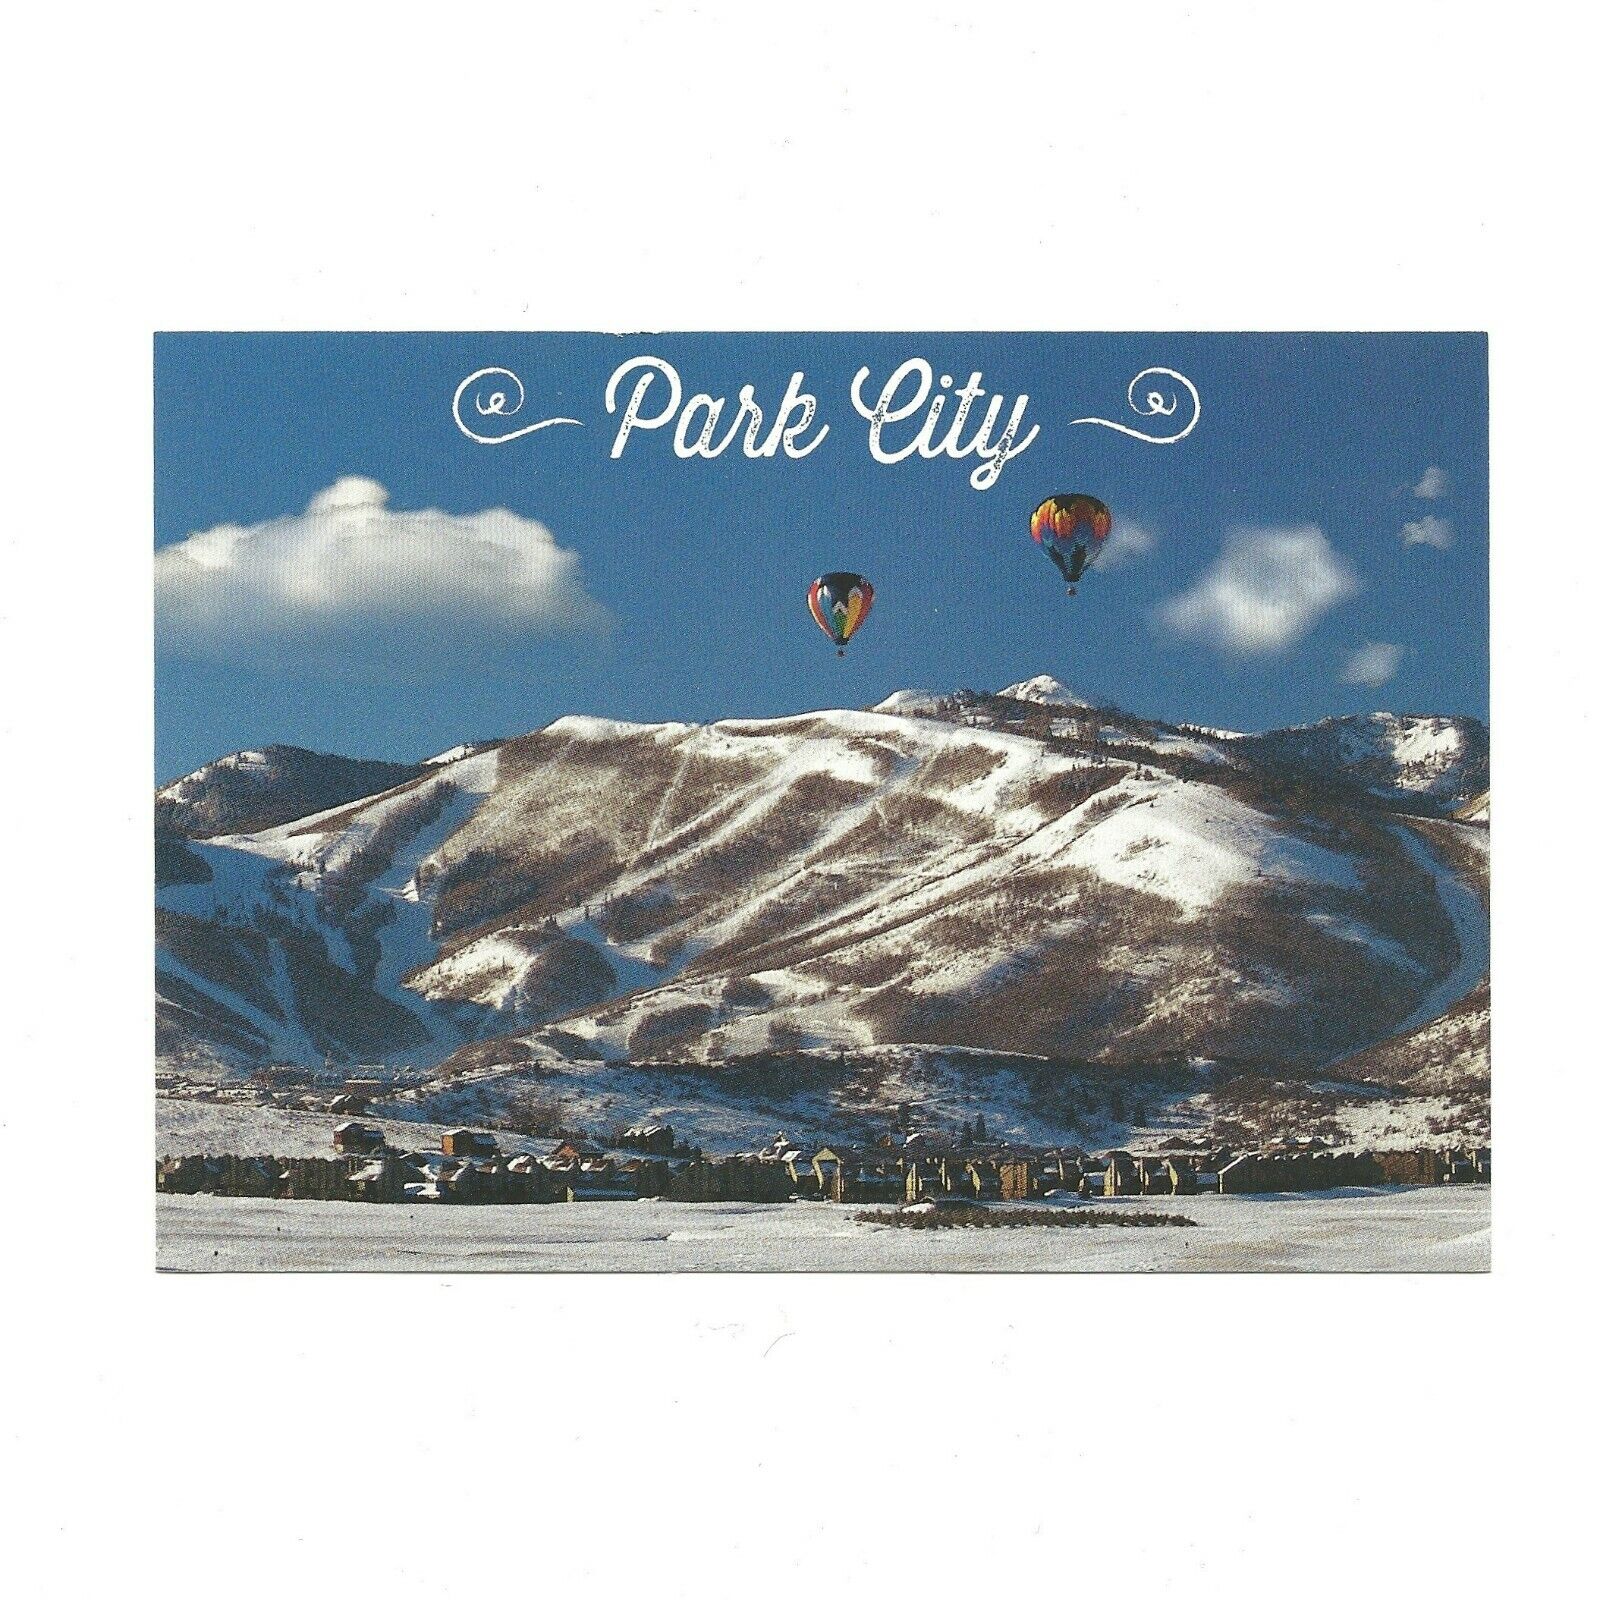 Park City Utah Skiing Ski Resort Postcard Snow Dusted Mountains Hot Air Balloon